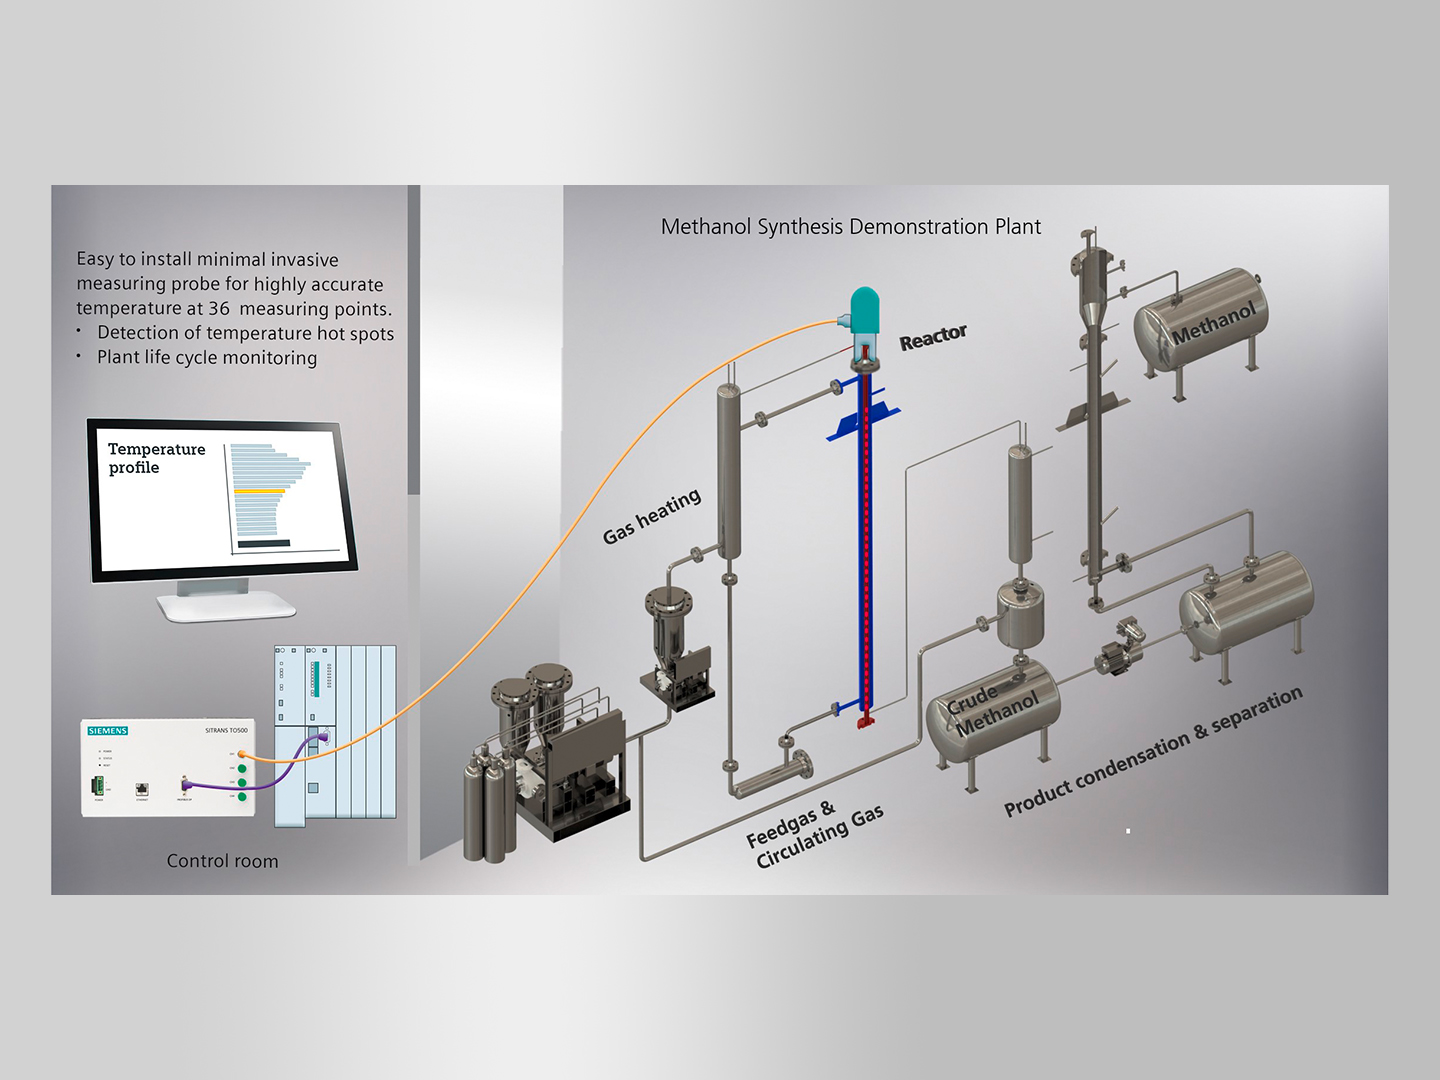 Simplified flow diagram of the methanol demonstration plant including fiber optic temperature measurement. 